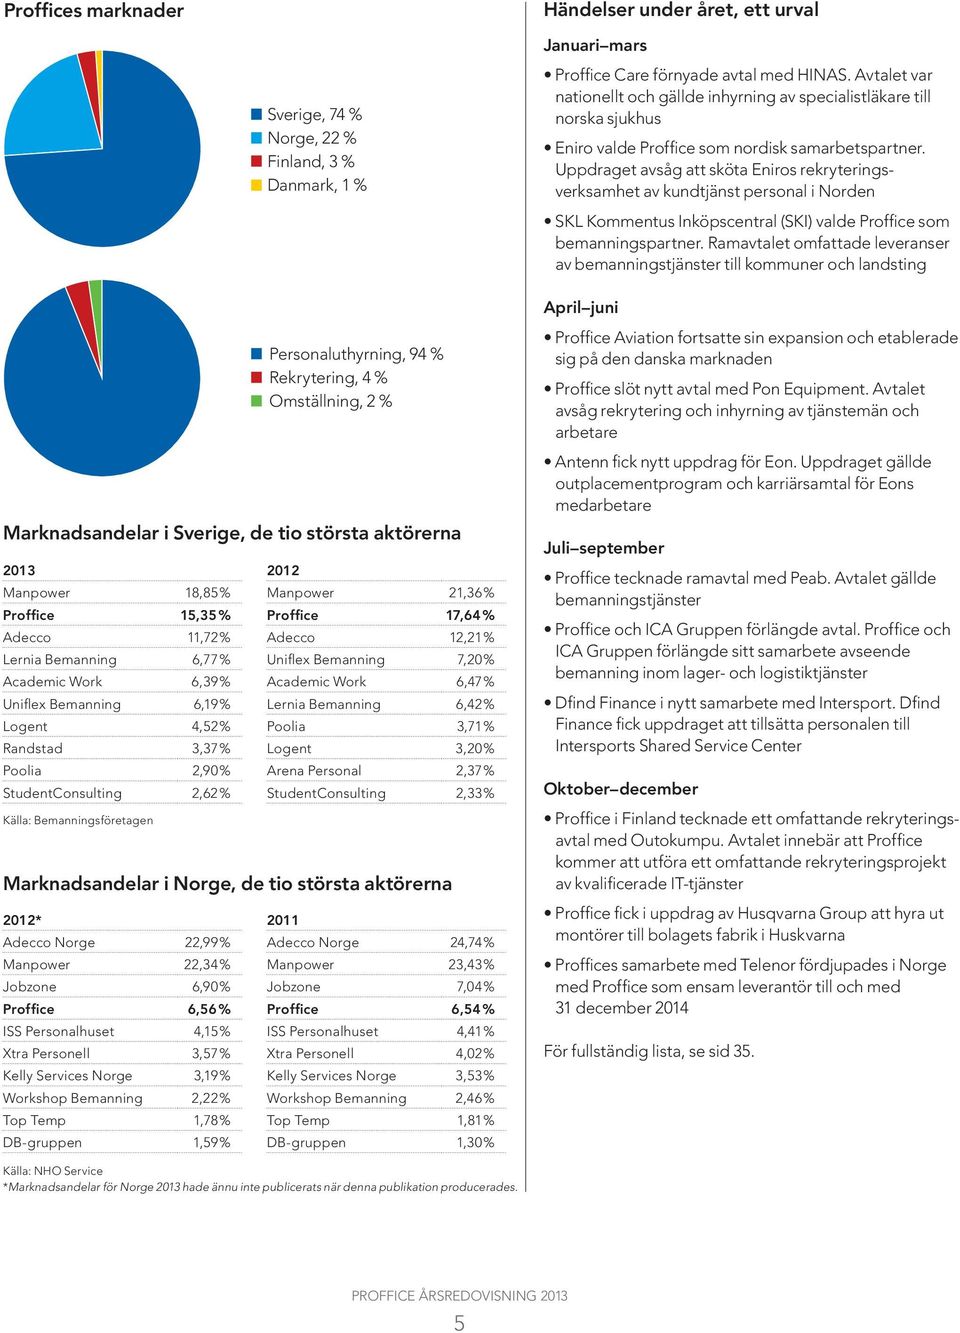 7,20 % Academic Work 6,47 % Lernia Bemanning 6,42 % Poolia 3,71 % Logent 3,20 % Arena Personal 2,37 % StudentConsulting 2,33 % Marknadsandelar i Norge, de tio största aktörerna 2012* Adecco Norge